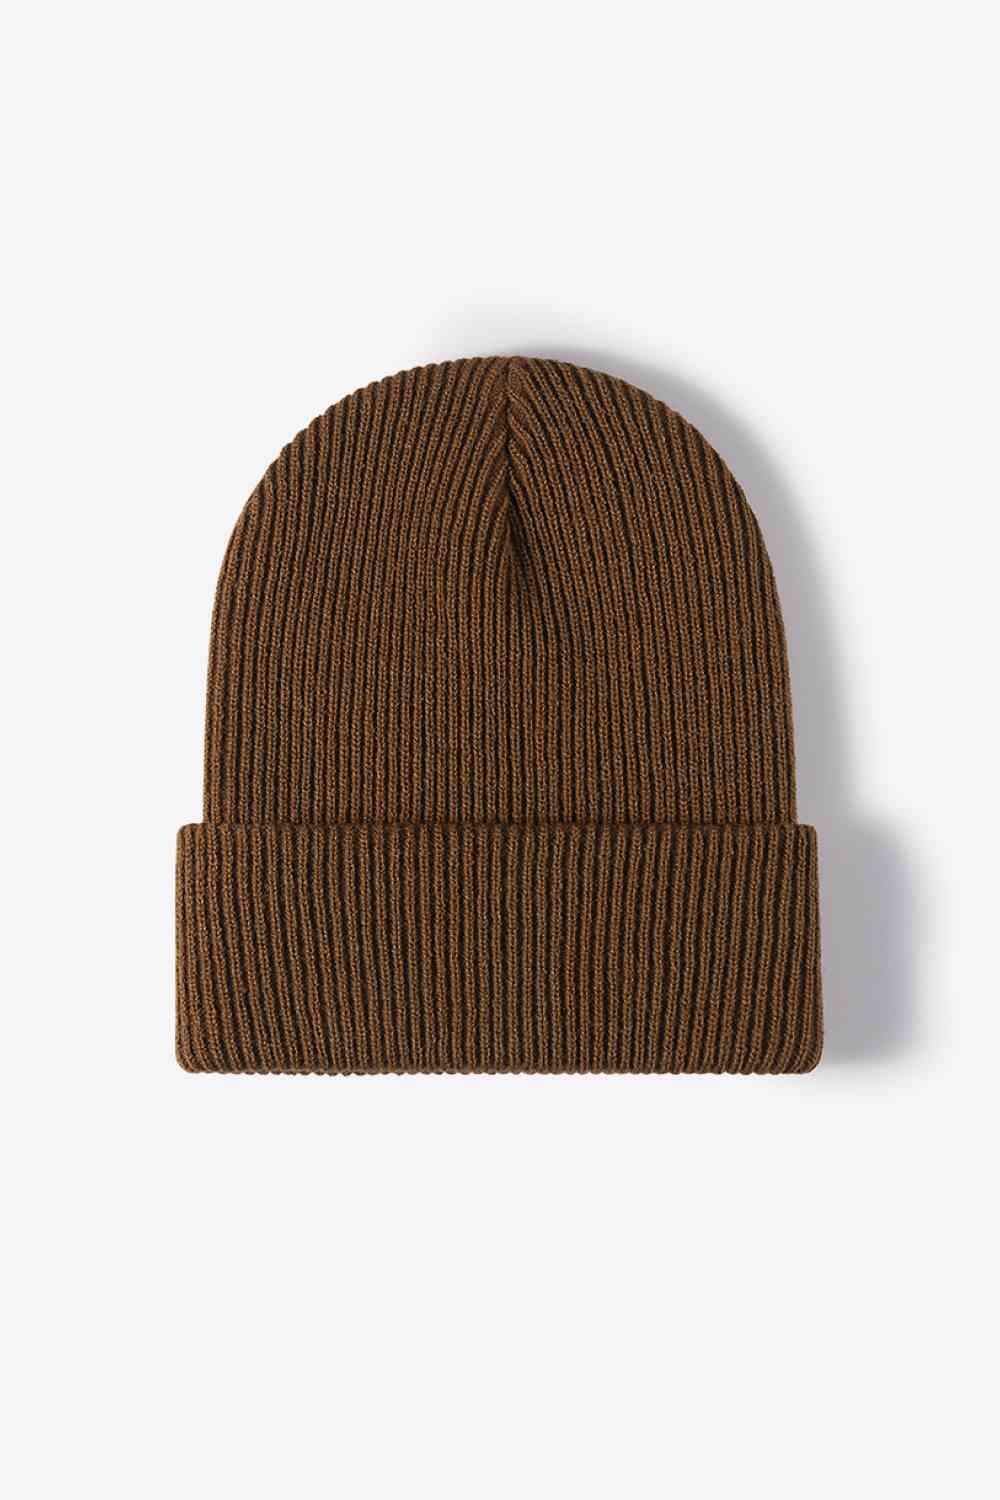 Warm Winter Knit Beanie Brown One Size